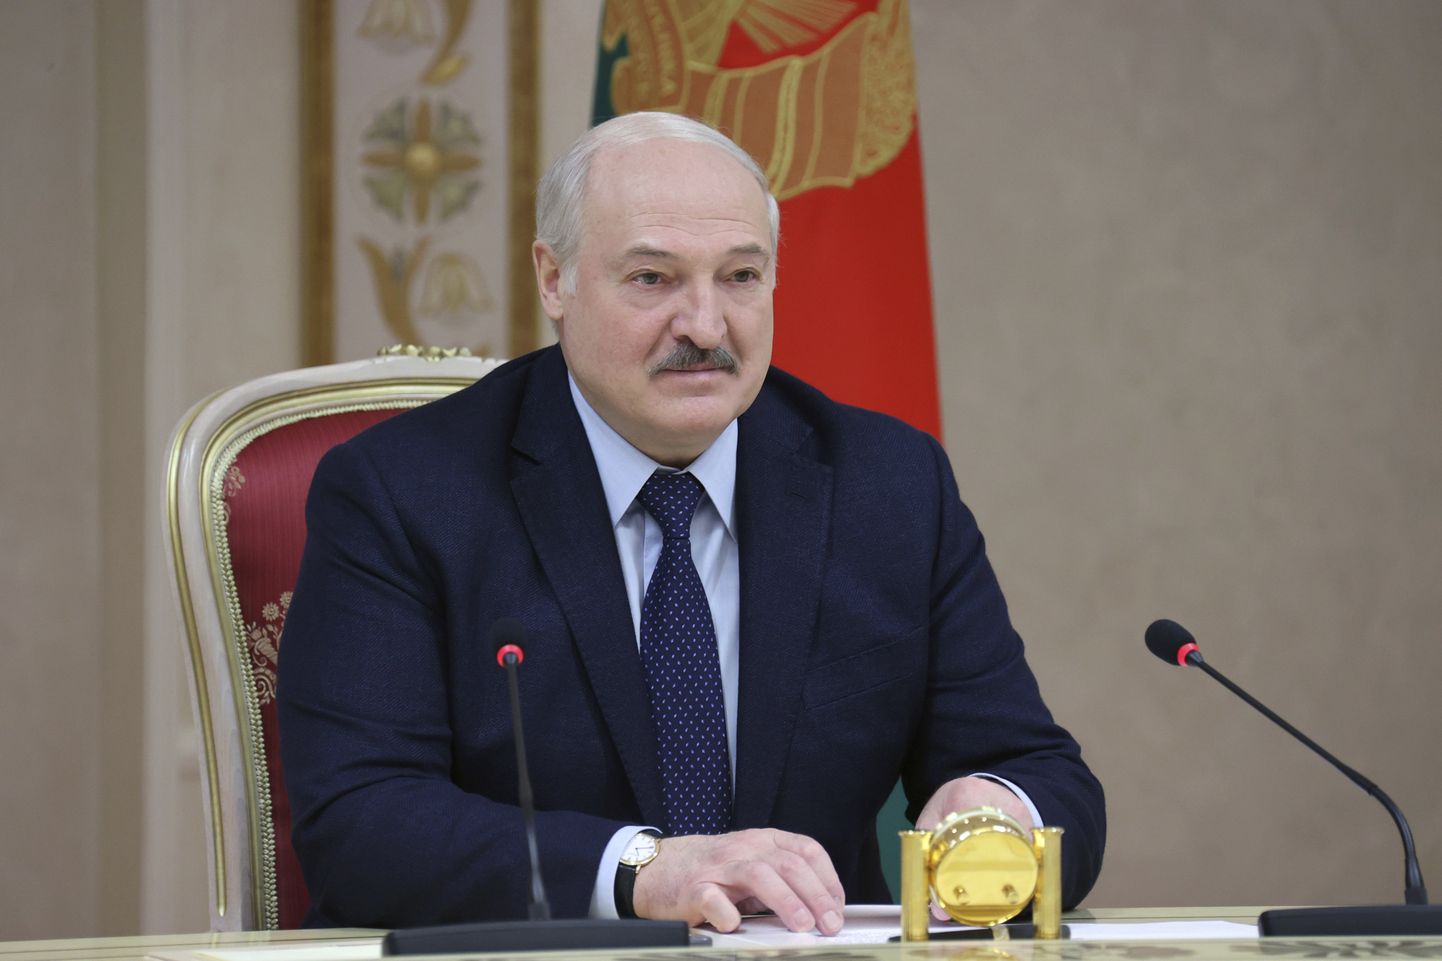 Aleksandrs Lukašenko